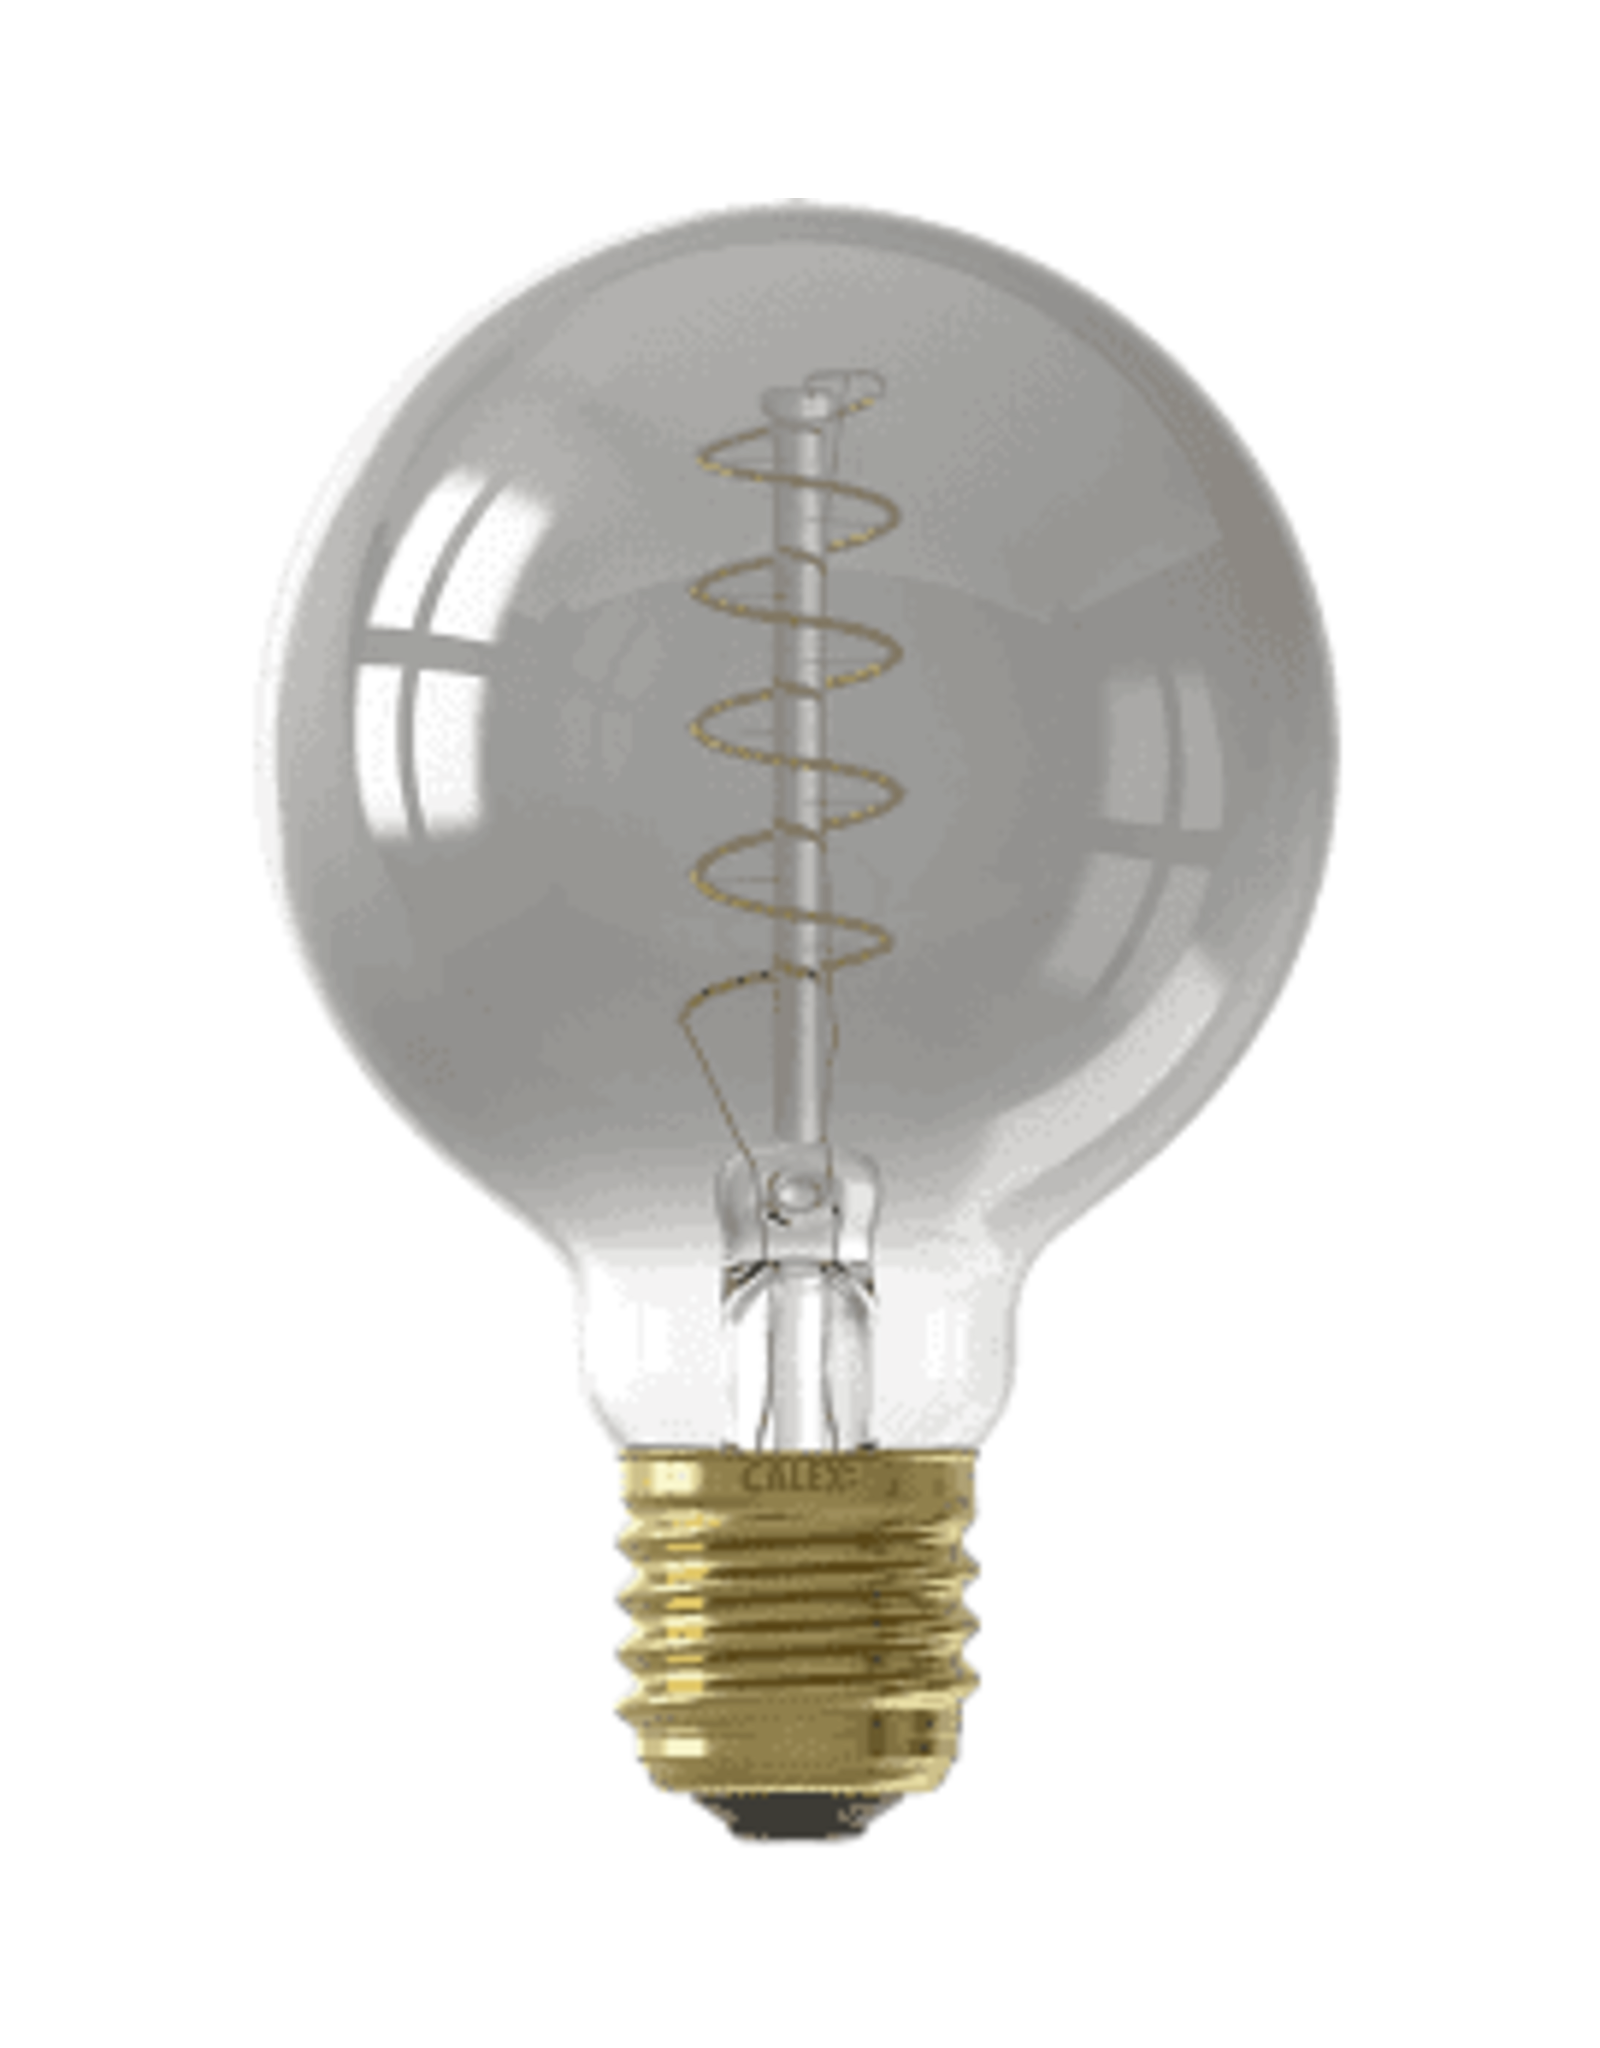 Calex Flex Filament LED Lamp - E27 - Globe G95 - Titanium - 4W - 136lm - Dimbaar 1800K